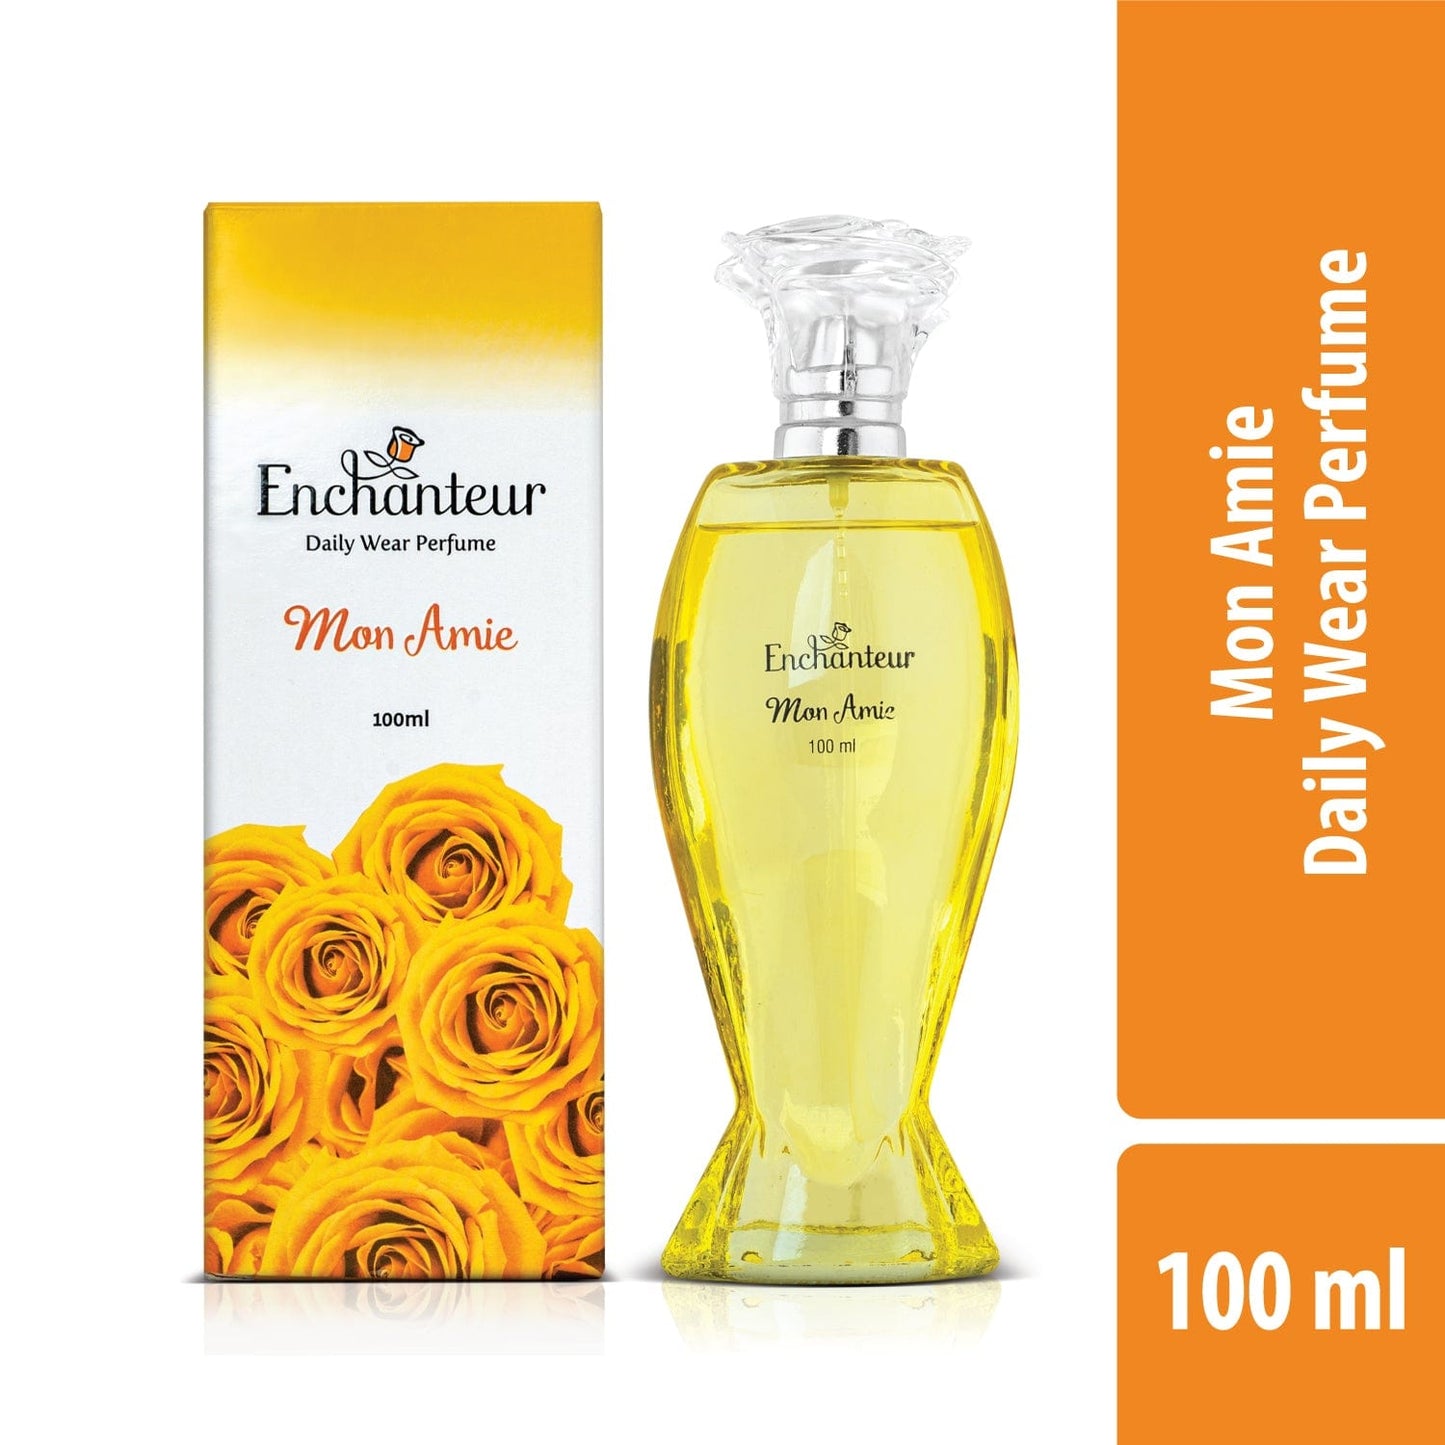 Enchanteur Mon Amie Daily wear Perfume for Women, 100ml